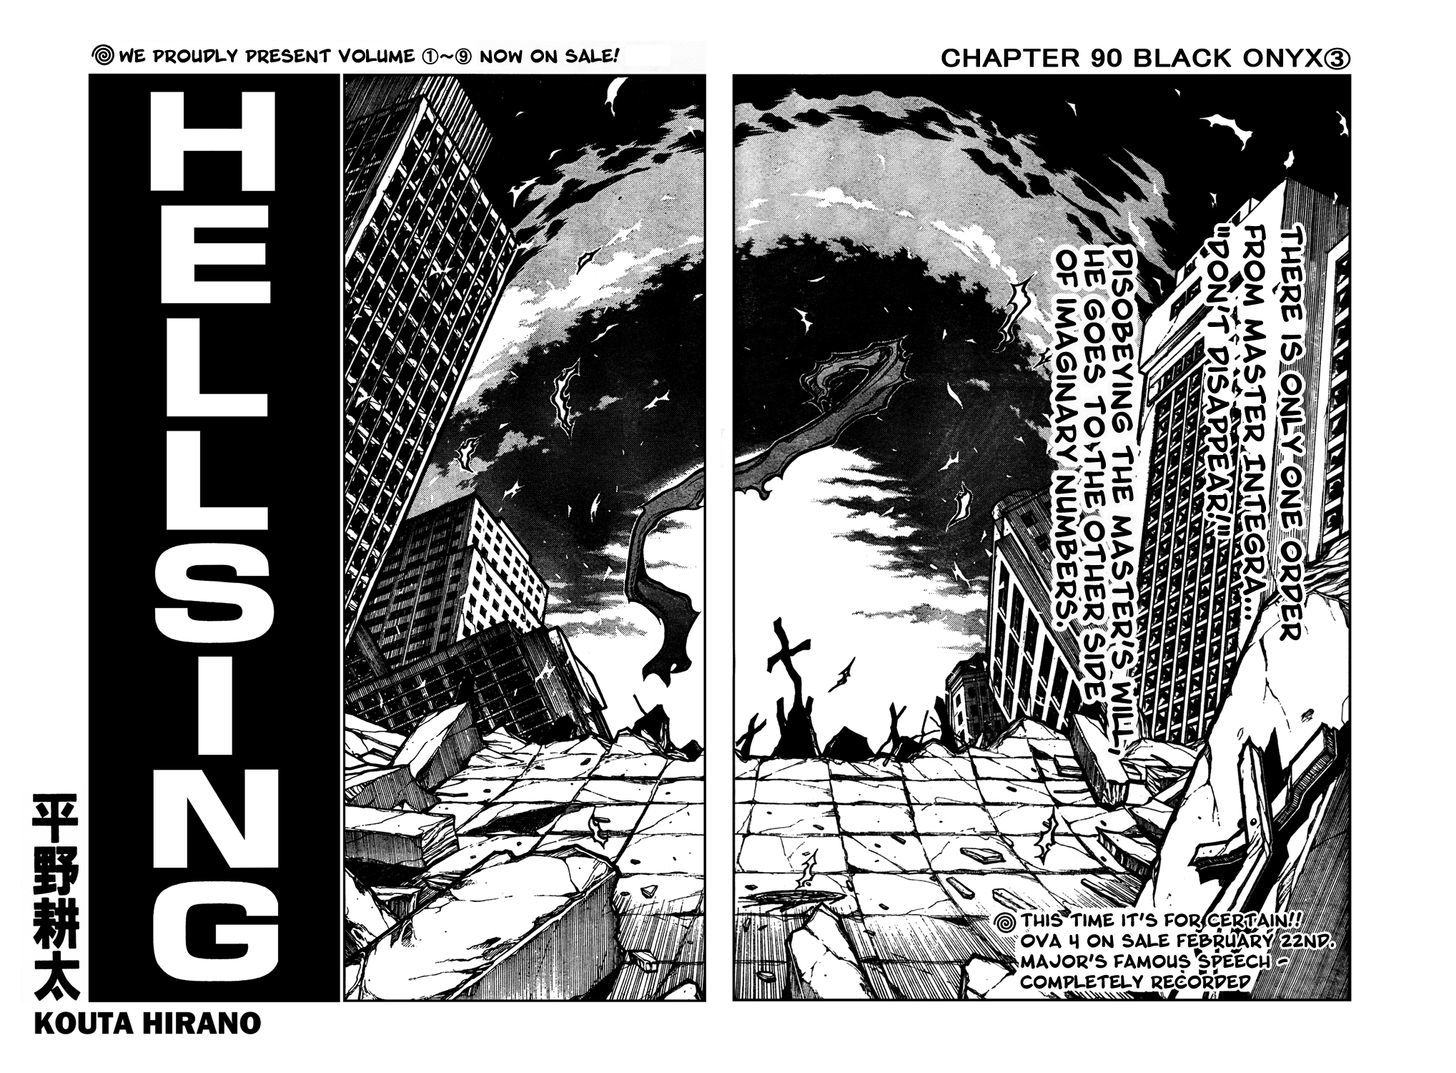 Hellsing - Page 2